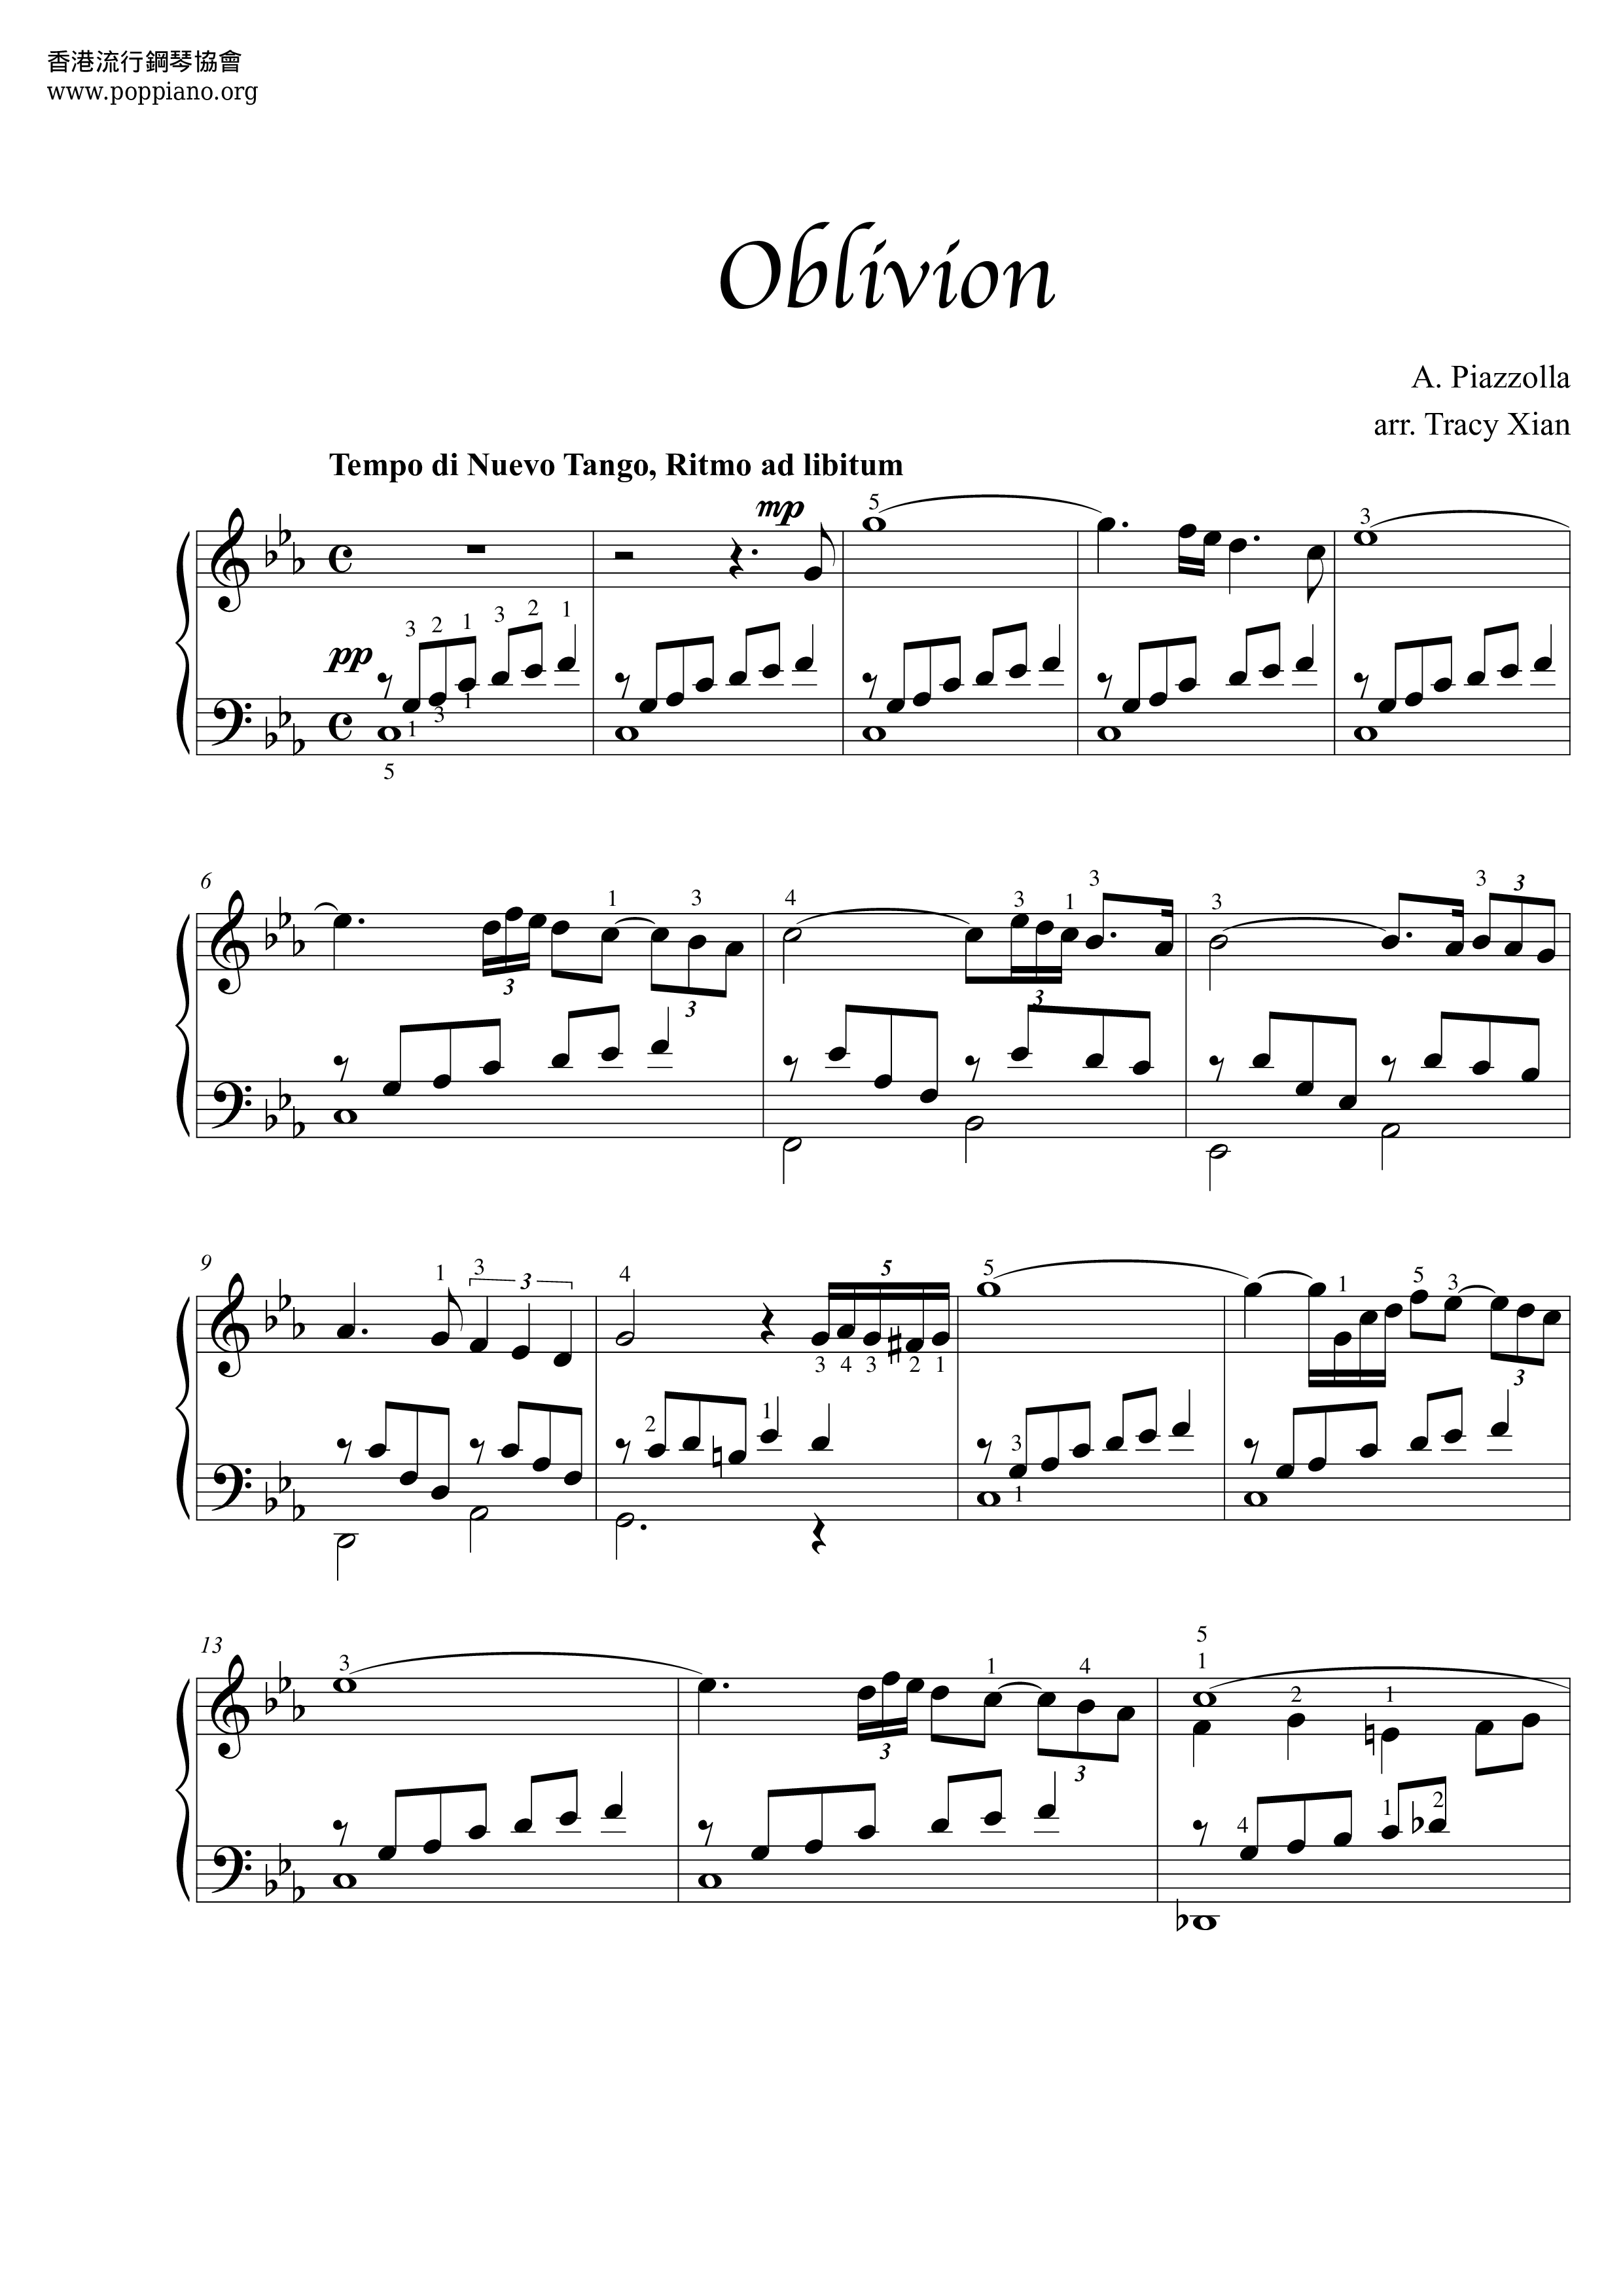 ☆ Oblivion Sheet Music Piano Score Free PDF Download | Piano Academy